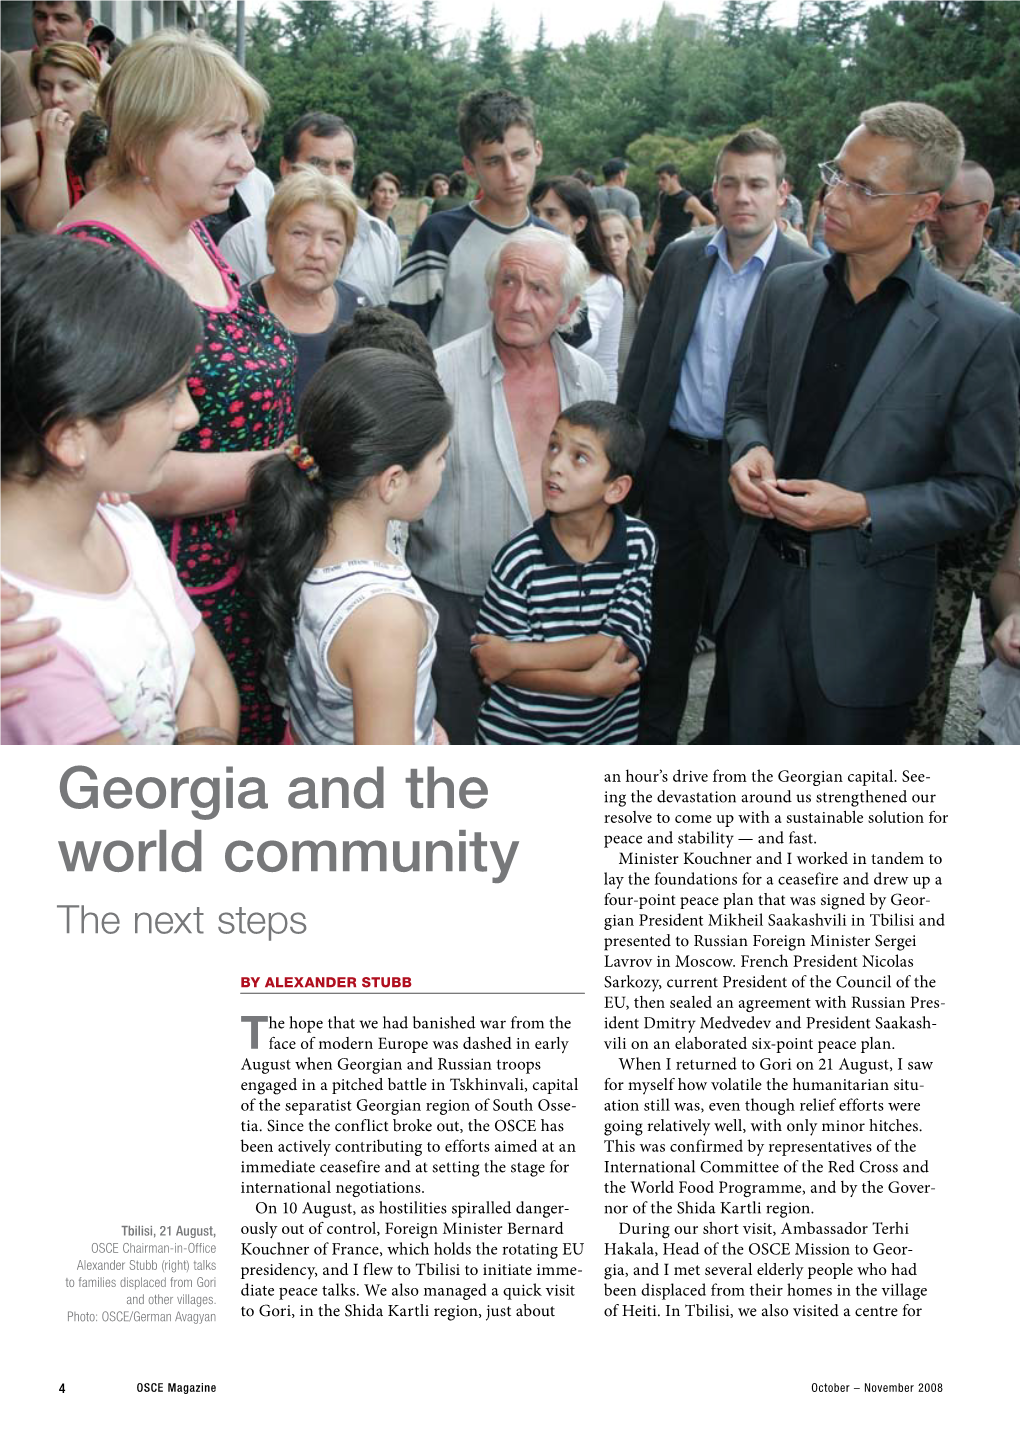 Georgia and the World Community